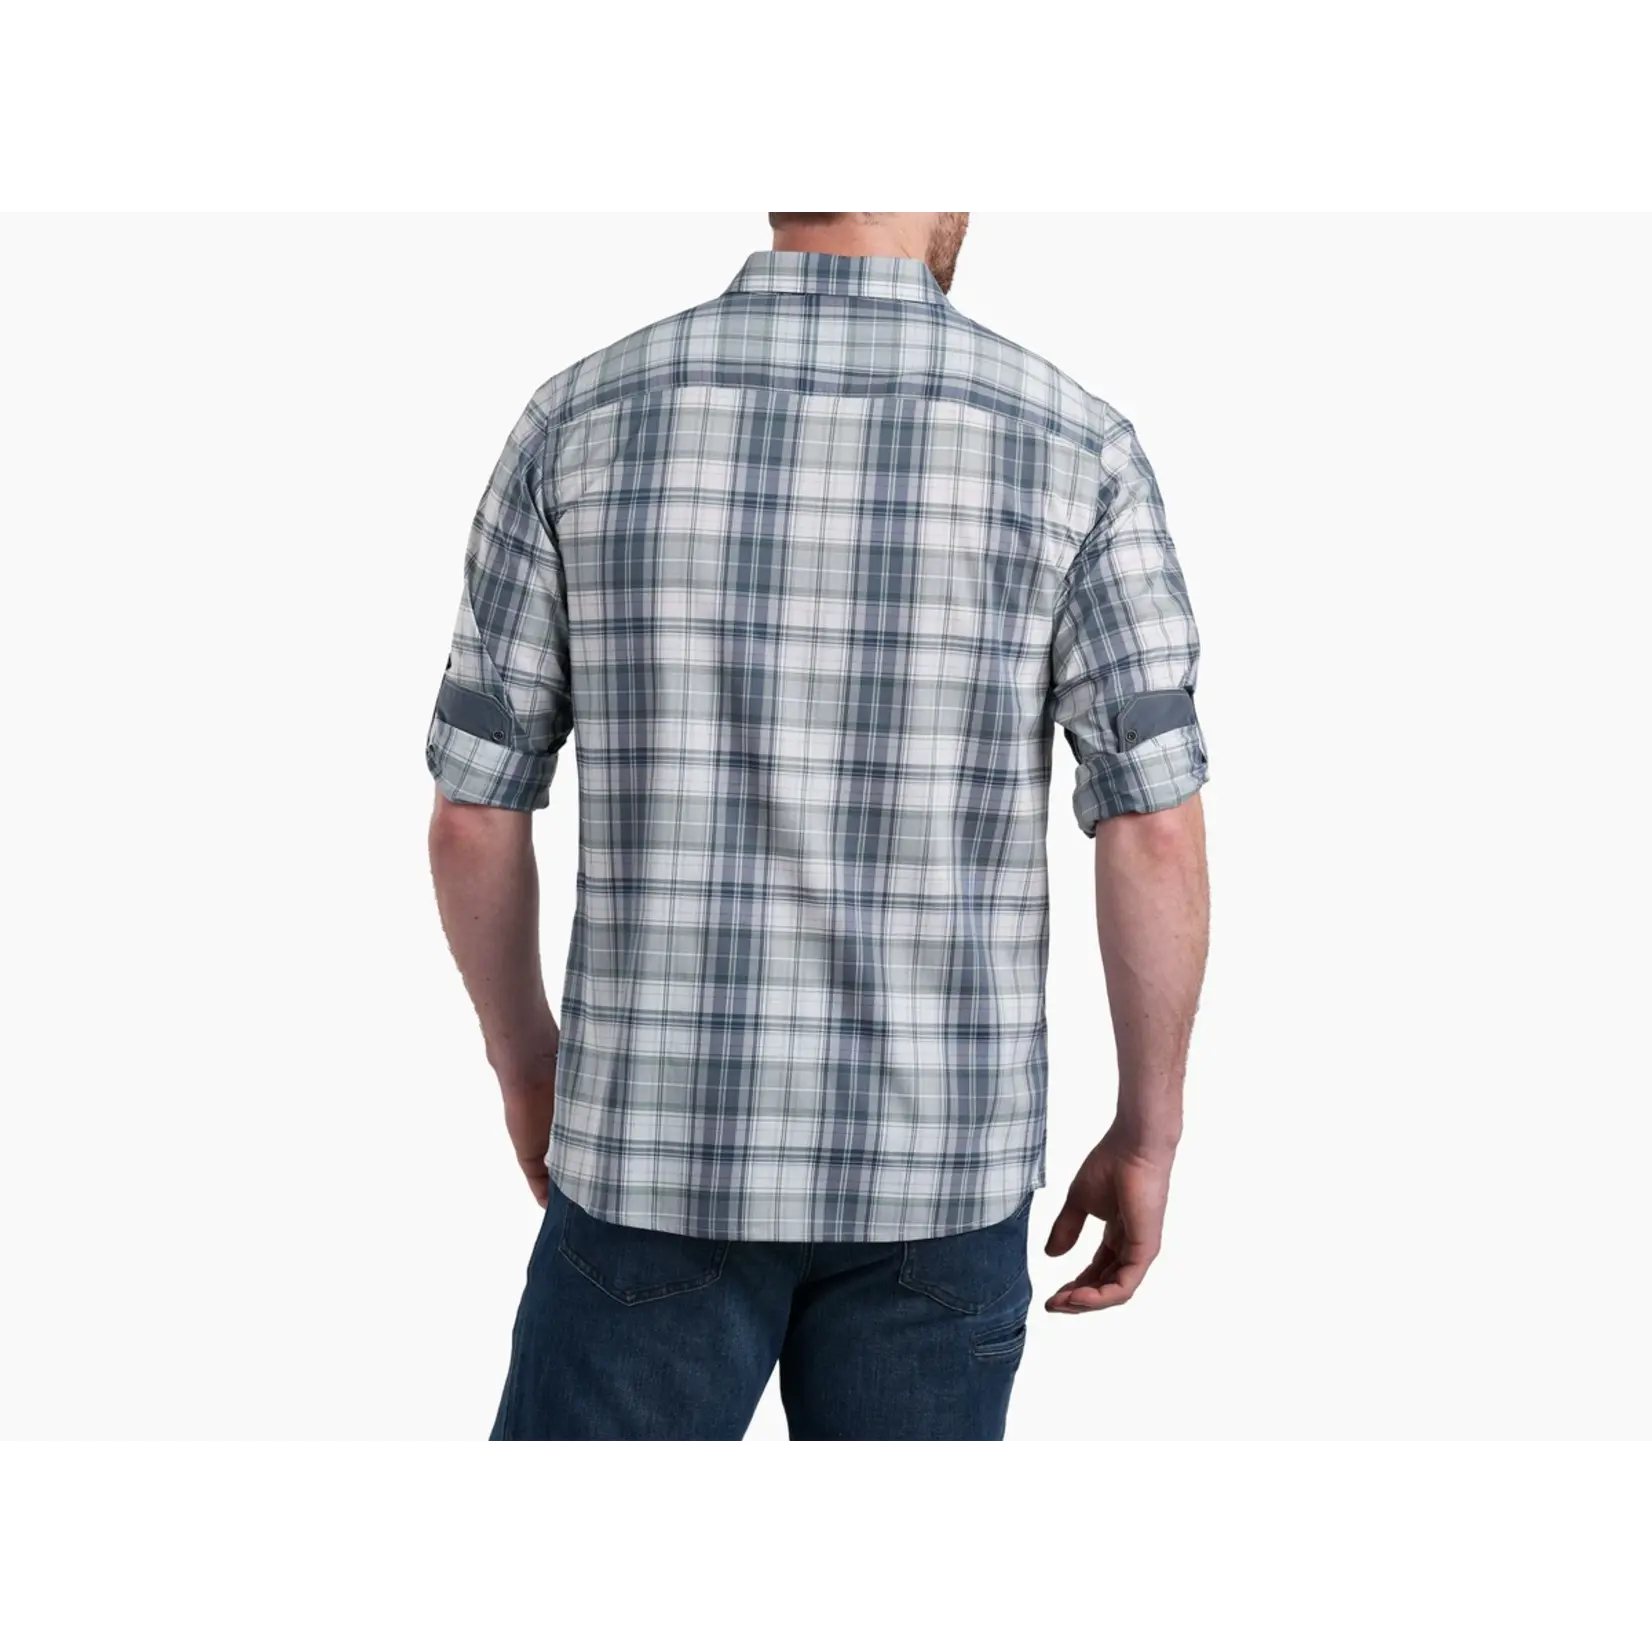 Kuhl Response Lite Long Sleeve Shirt